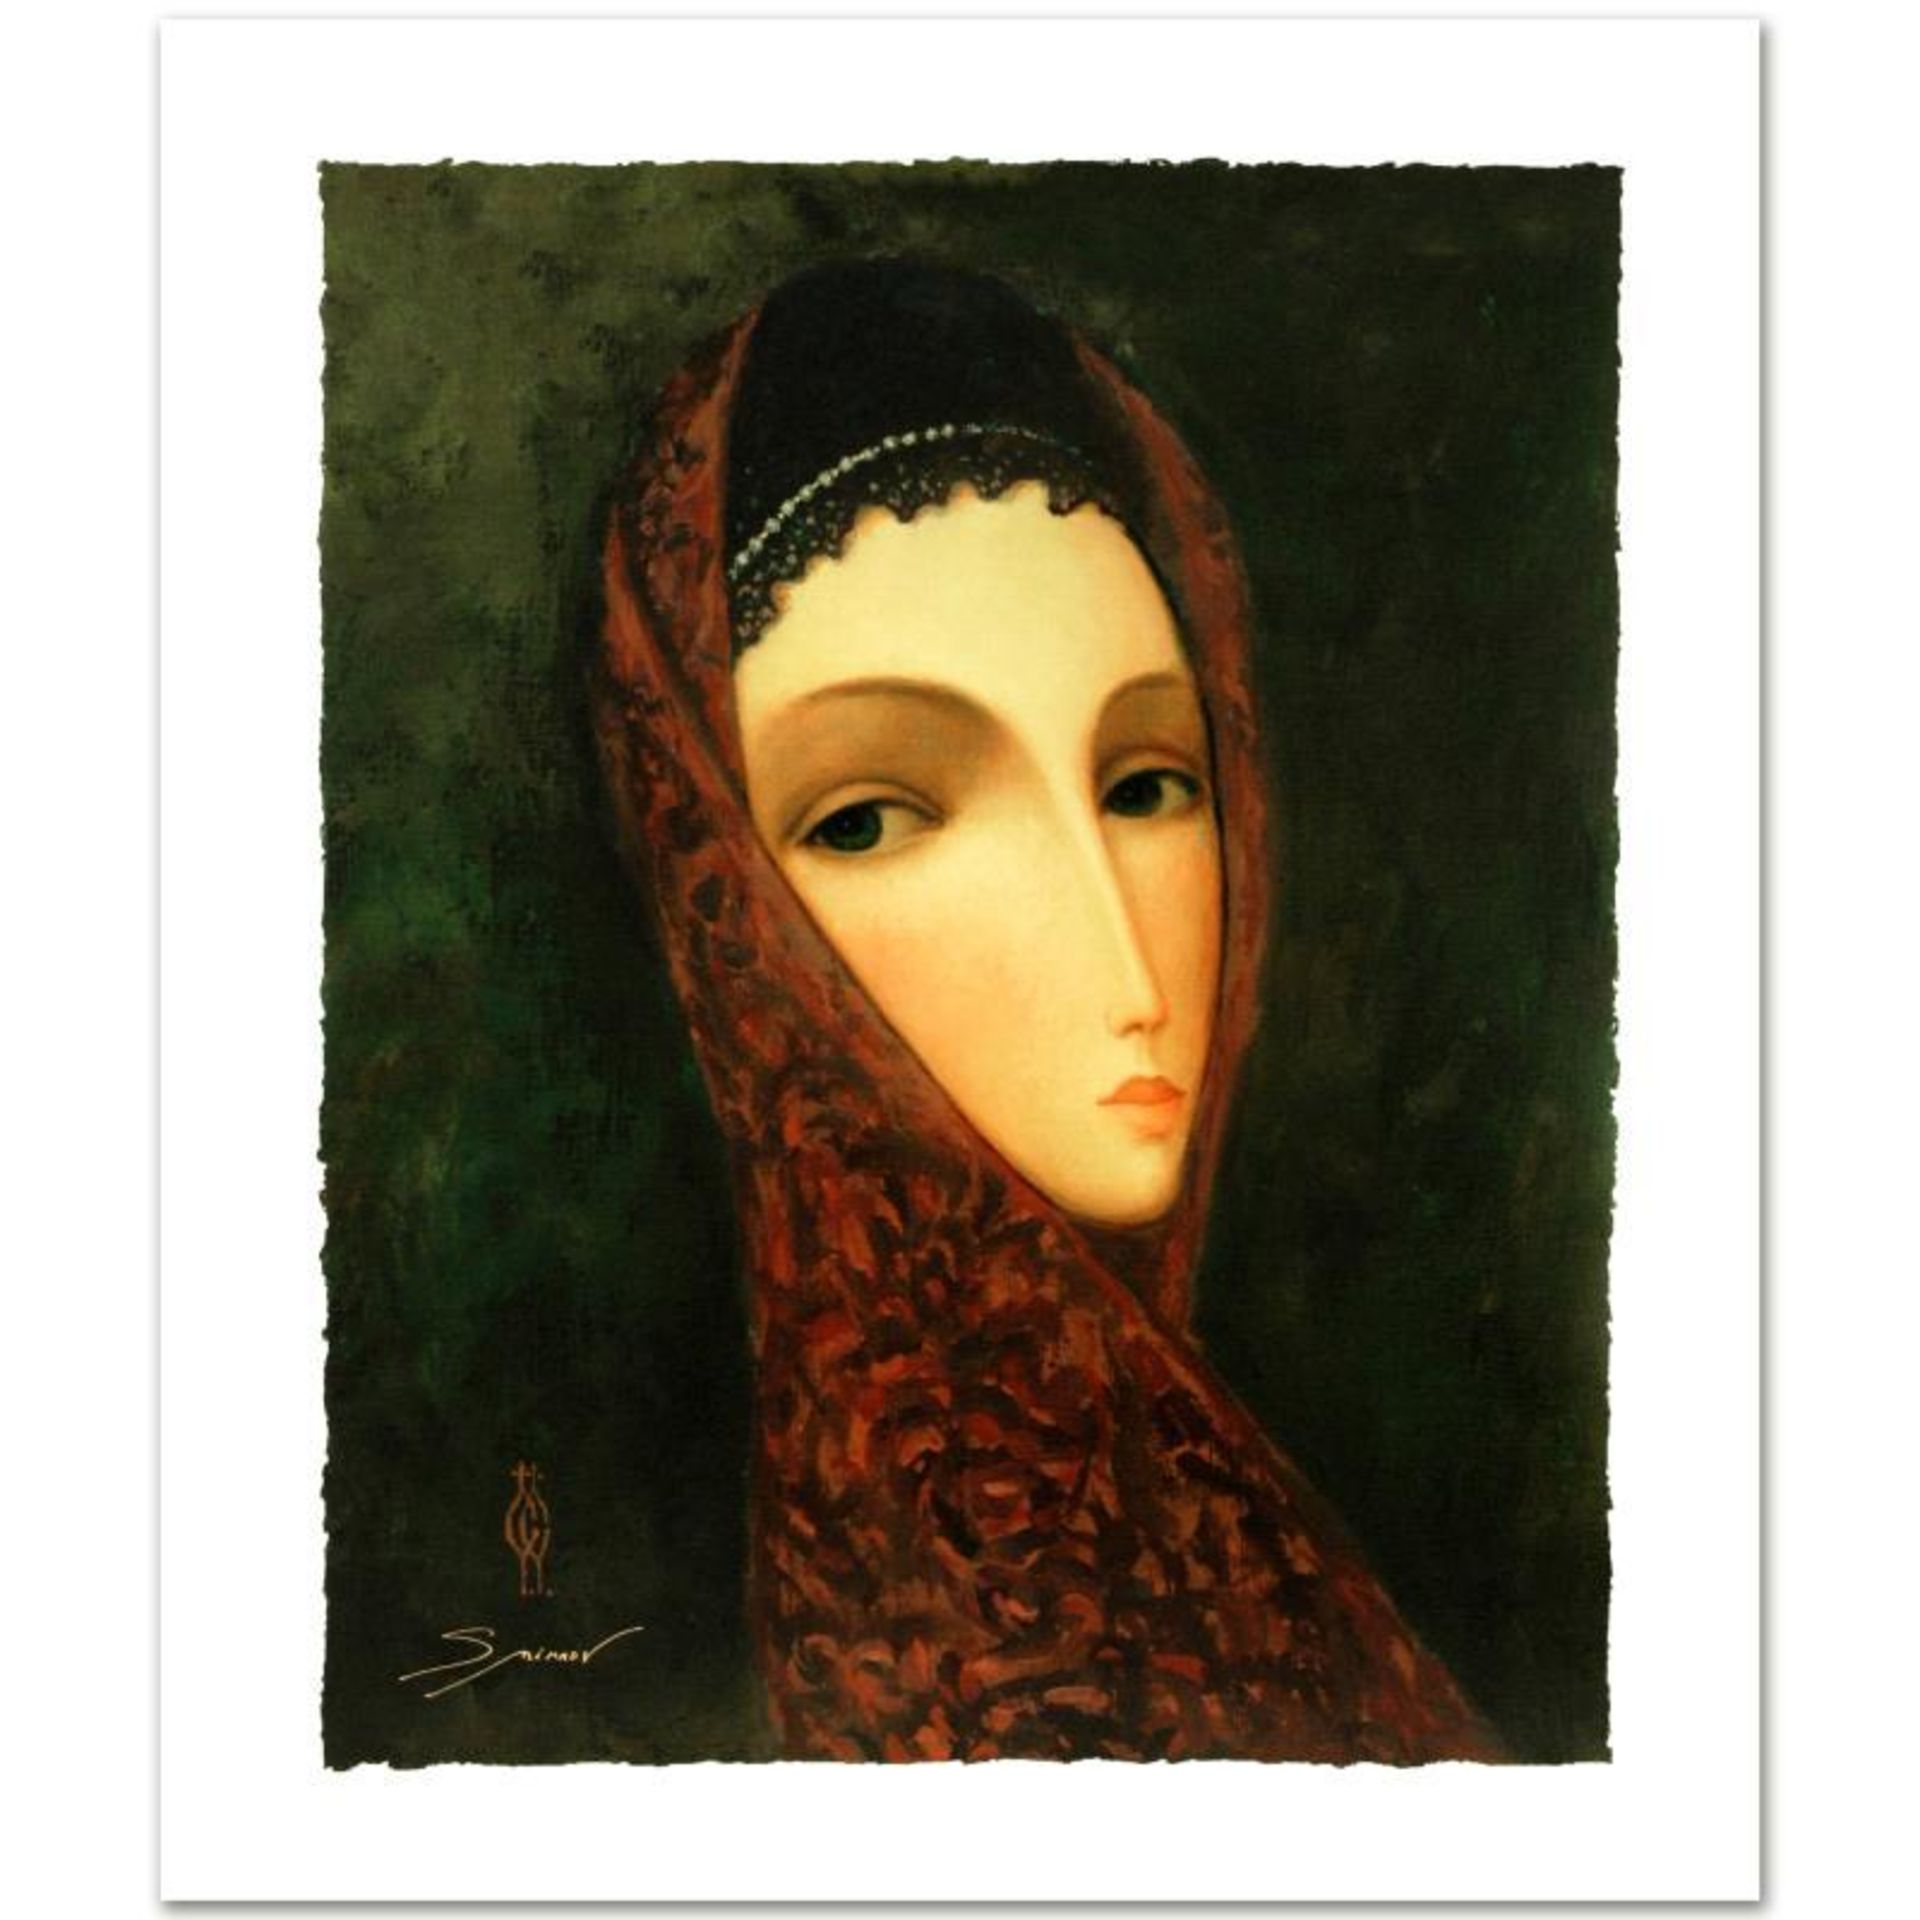 Sergey Smirnov (1953-2006), "Contessa" Limited Edition Mixed Media on Canvas, Nu